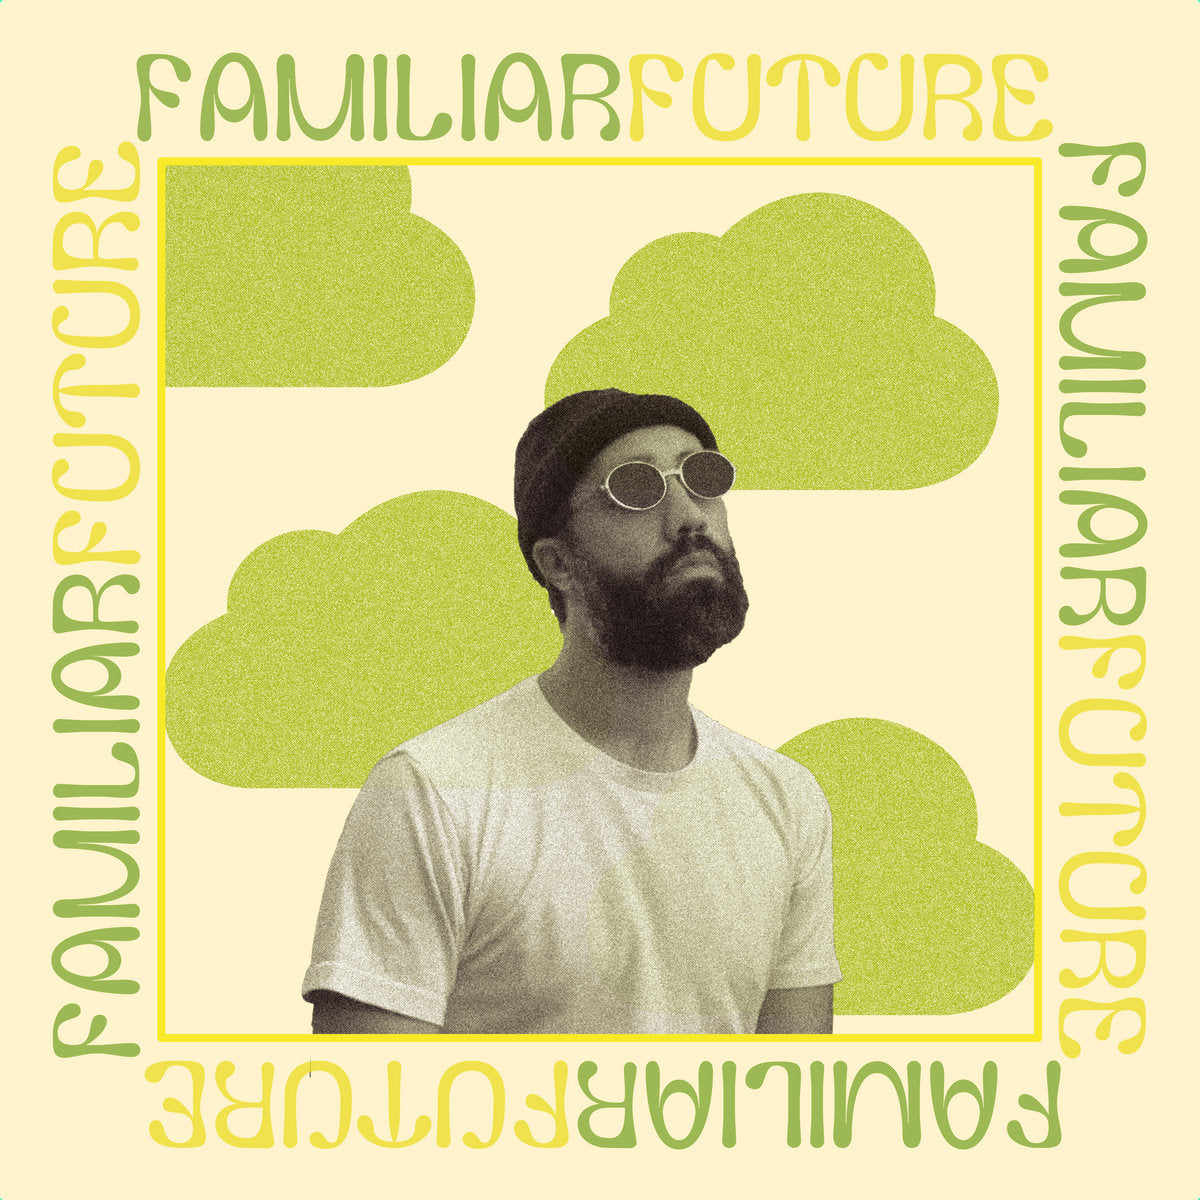 Stu, Dougie: Familiar Future (Coloured Vinyl LP)